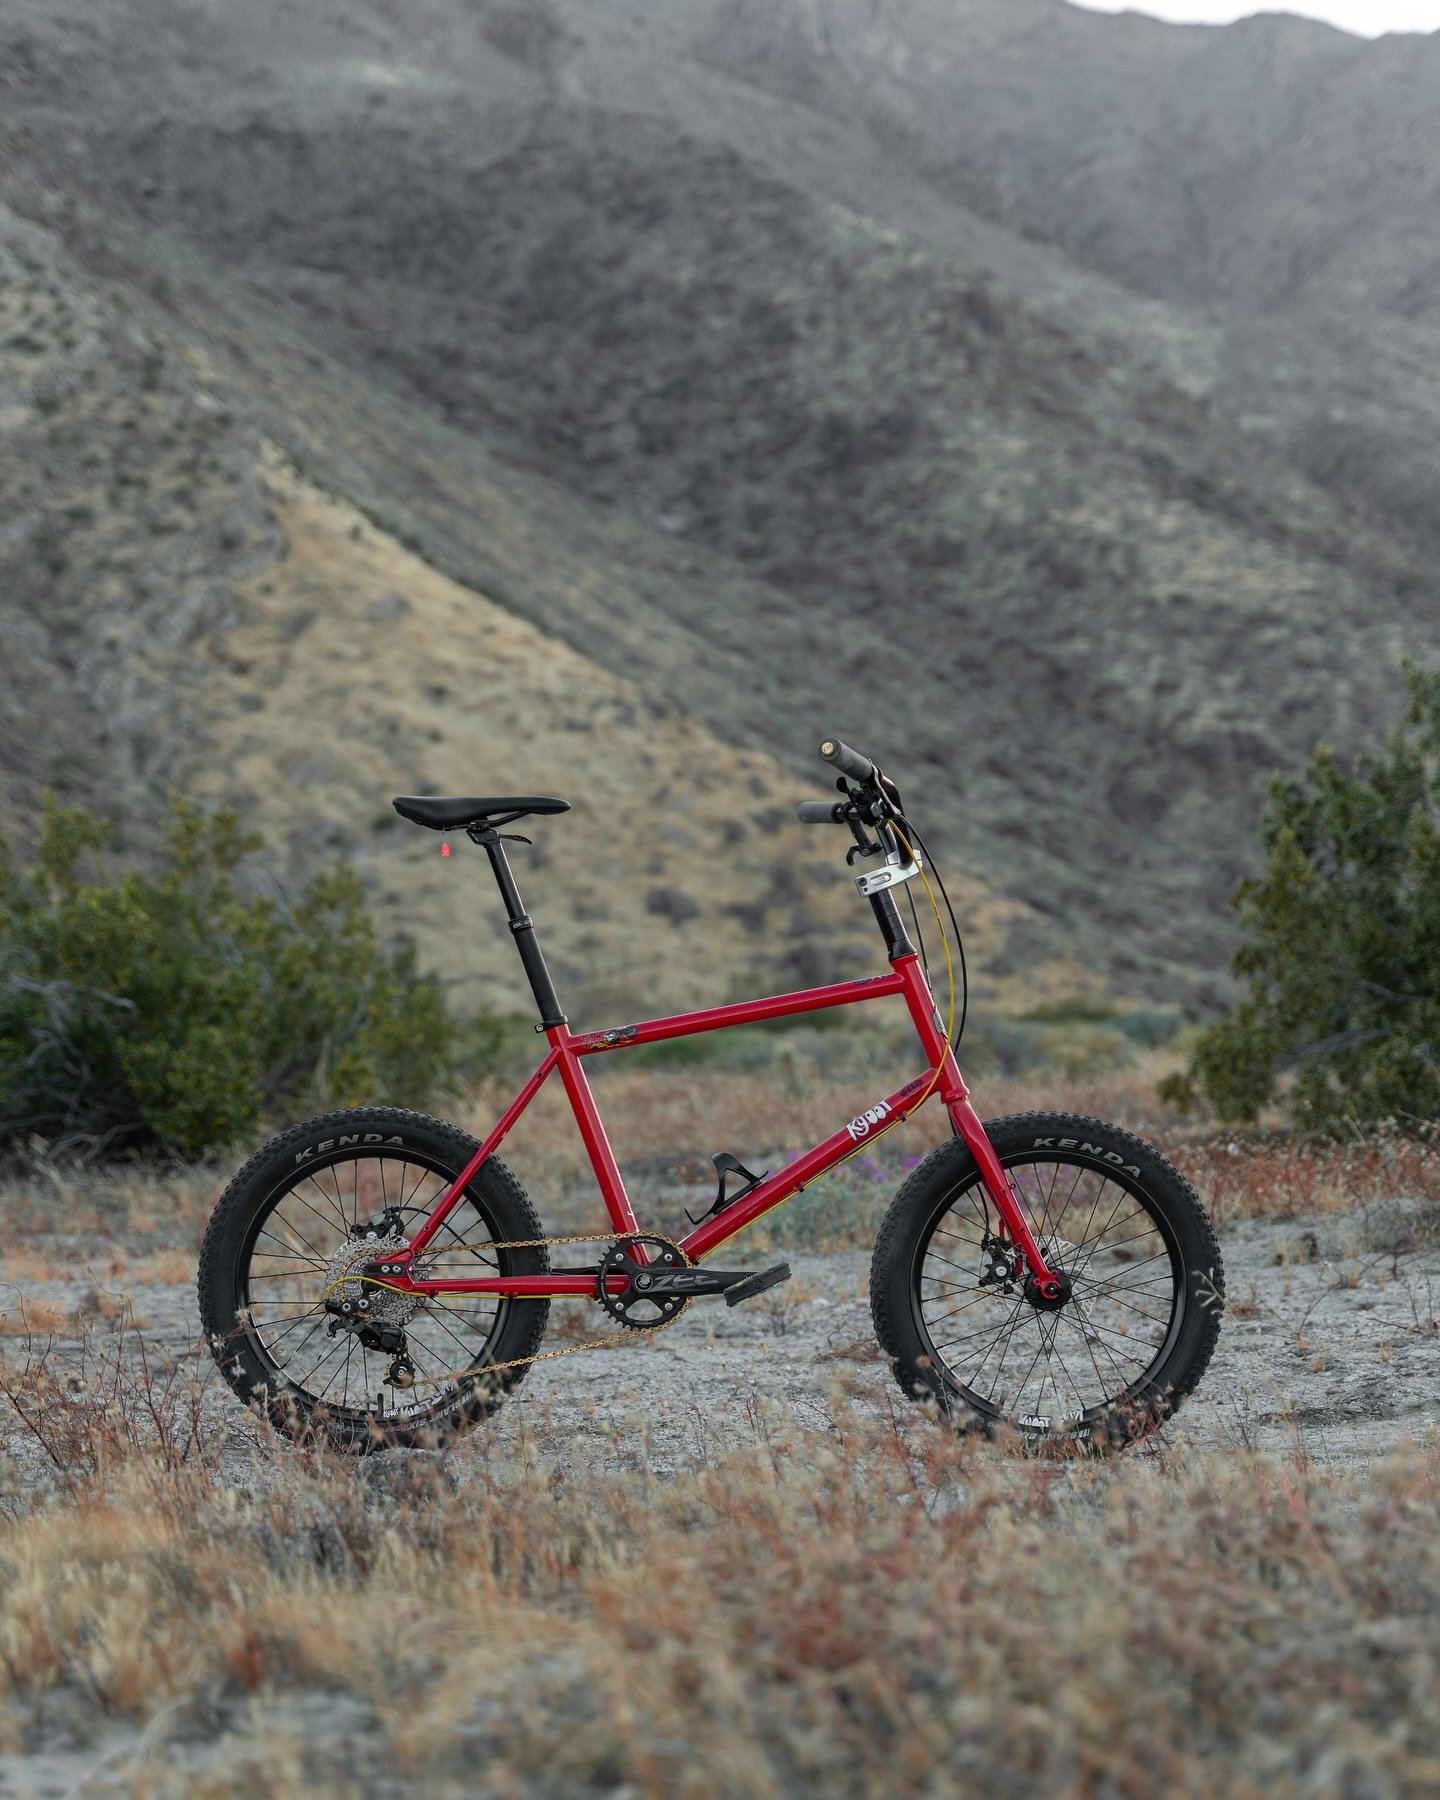 Dirt bike 🌶️ 
.
.
.
📸 @fudgelump 

#kyootbikes #bmx #altcycling #minivelo #gravelspecific